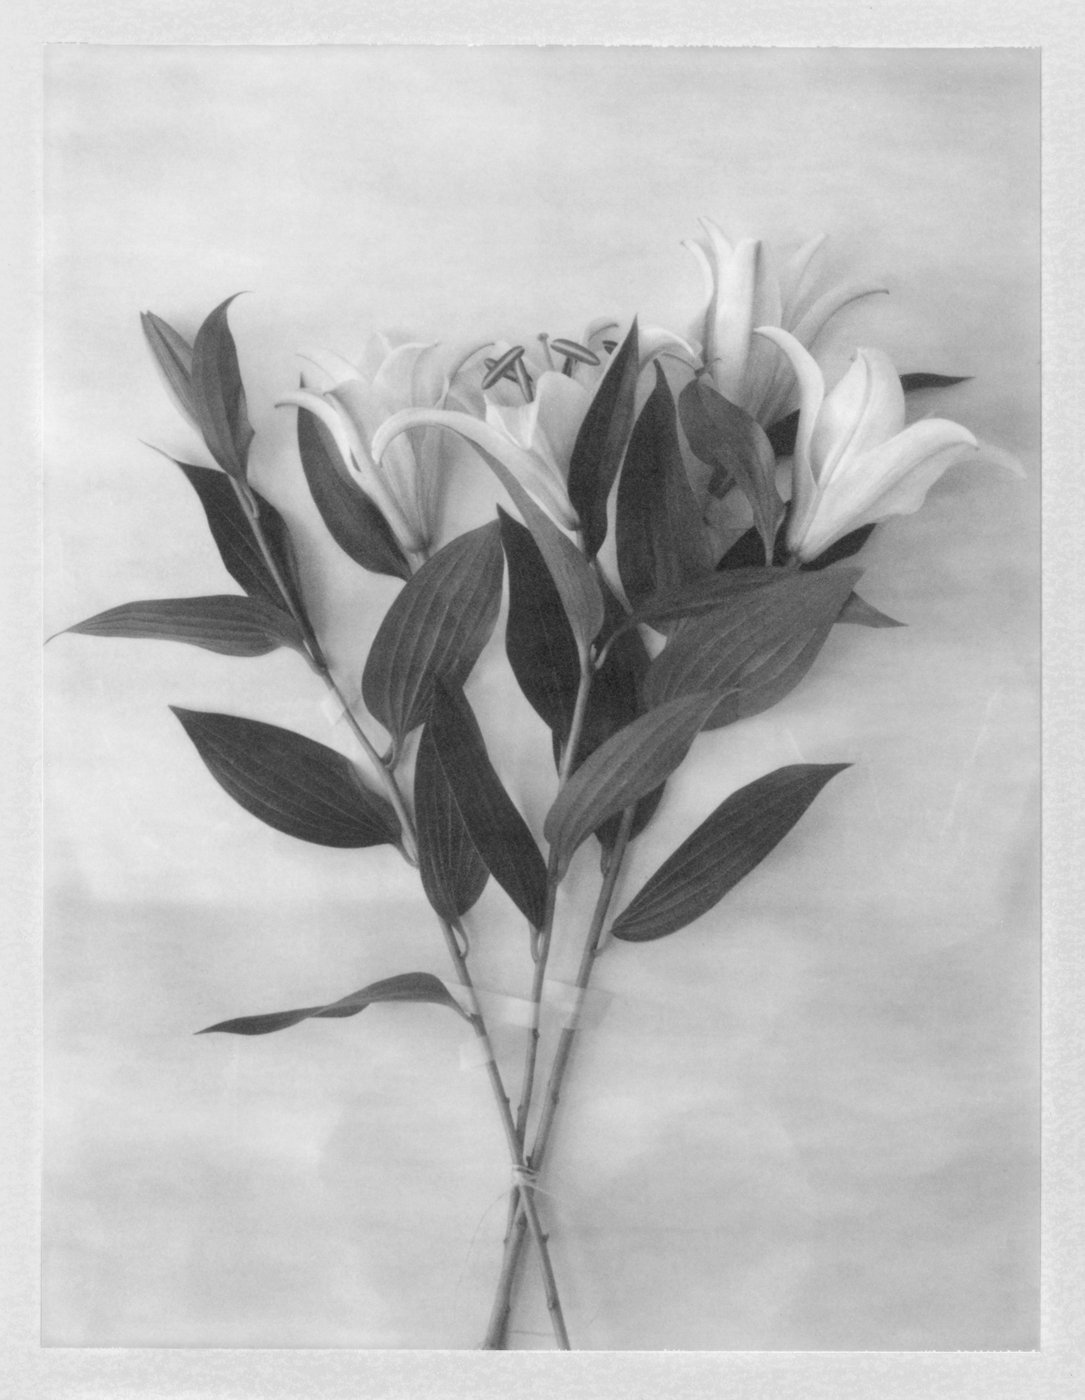  Lillies. 2017. Archival Pigment Print. 9" x 7" 